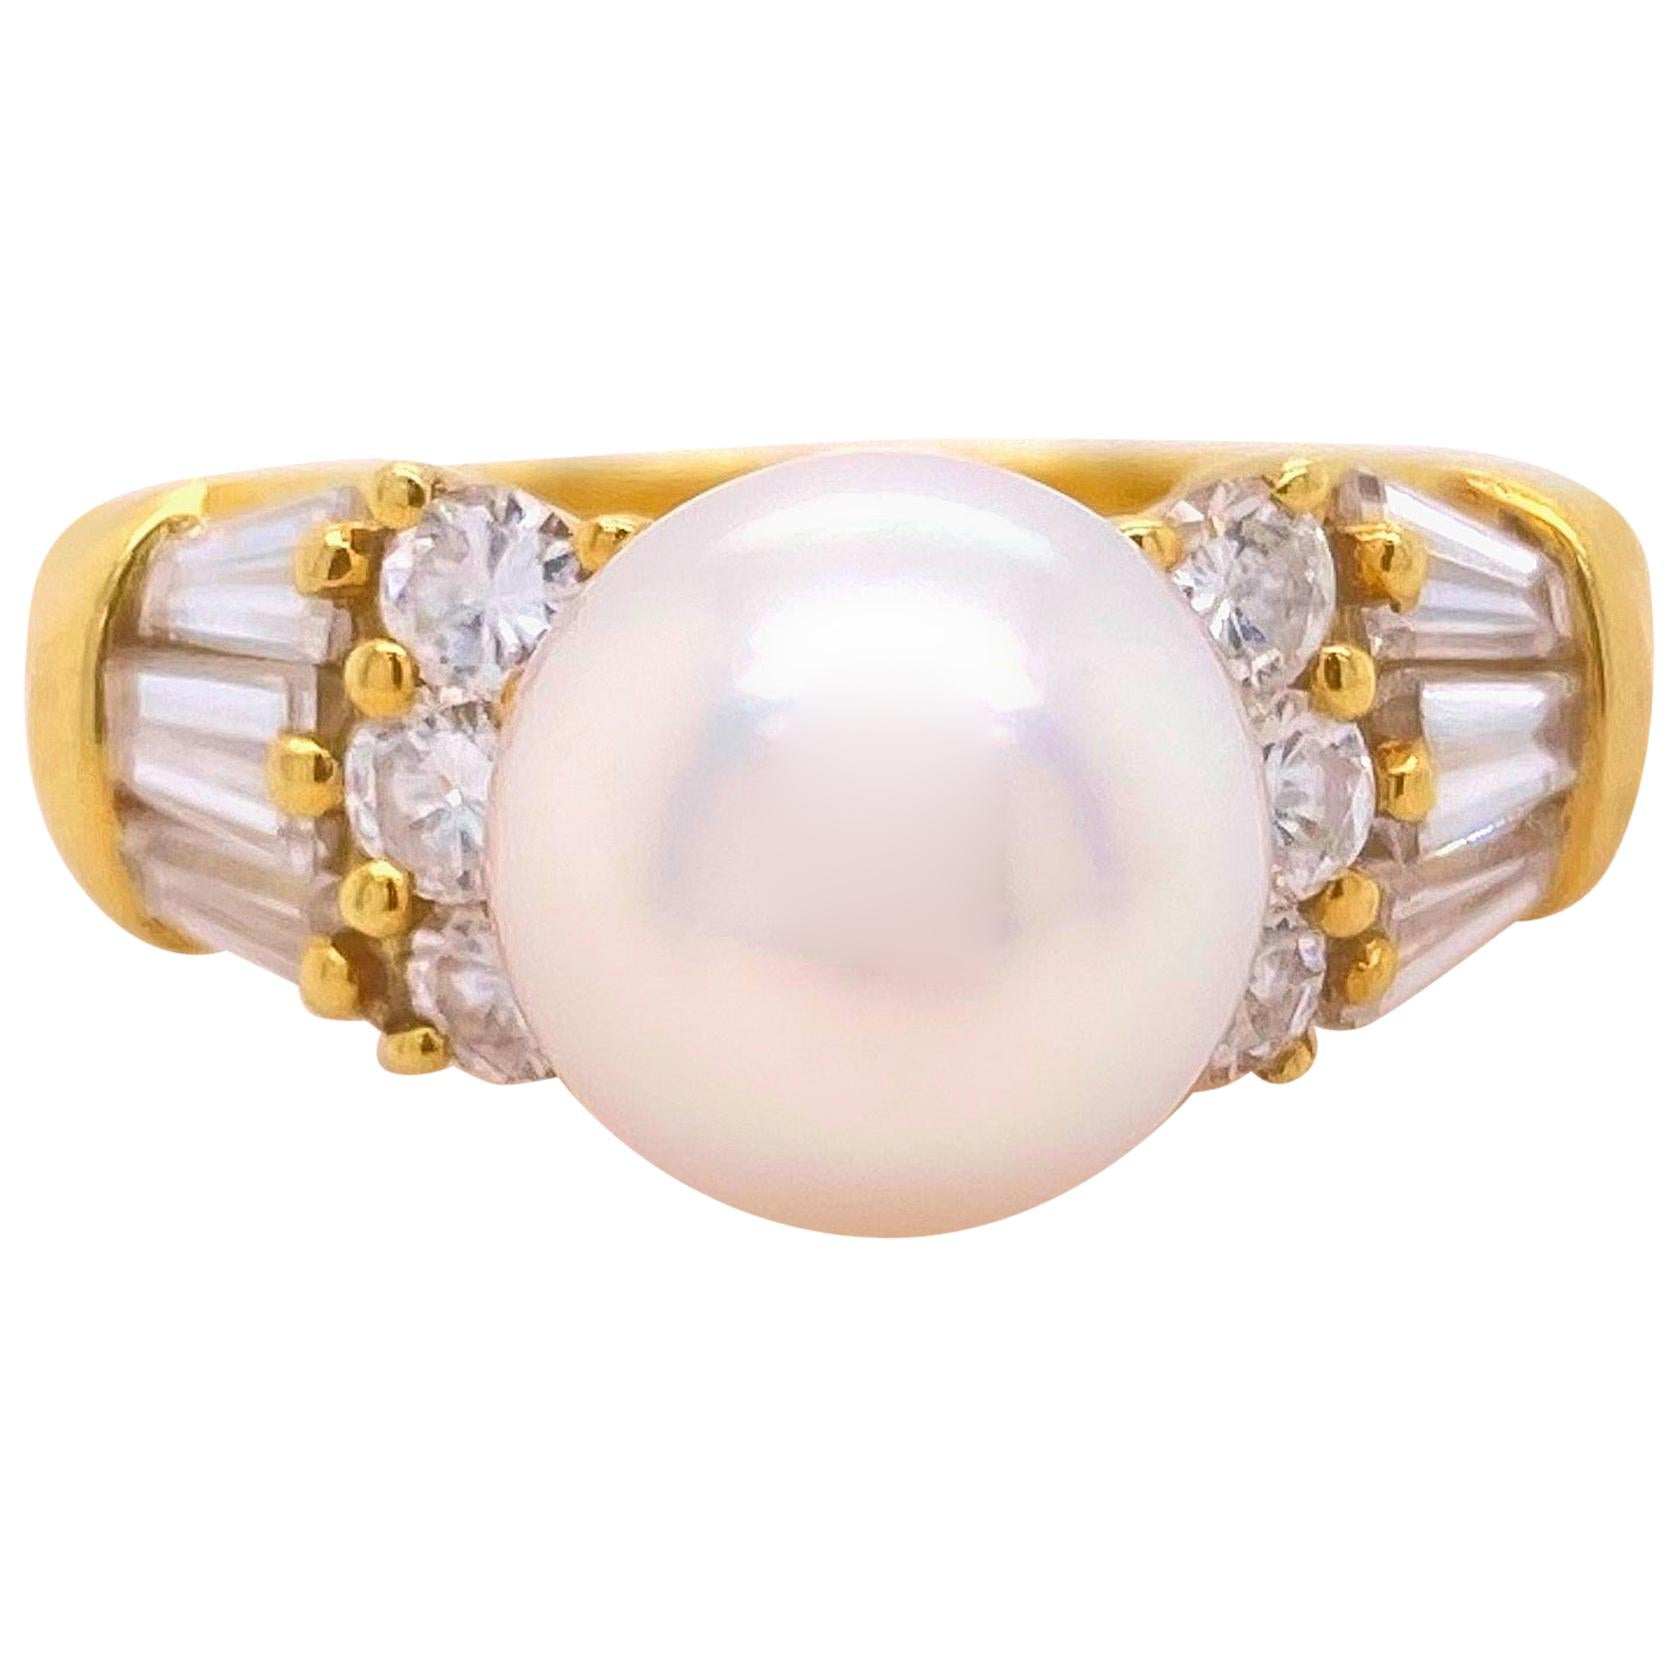 Mikimoto, bague Akoya en or jaune 18 carats avec perles et diamants